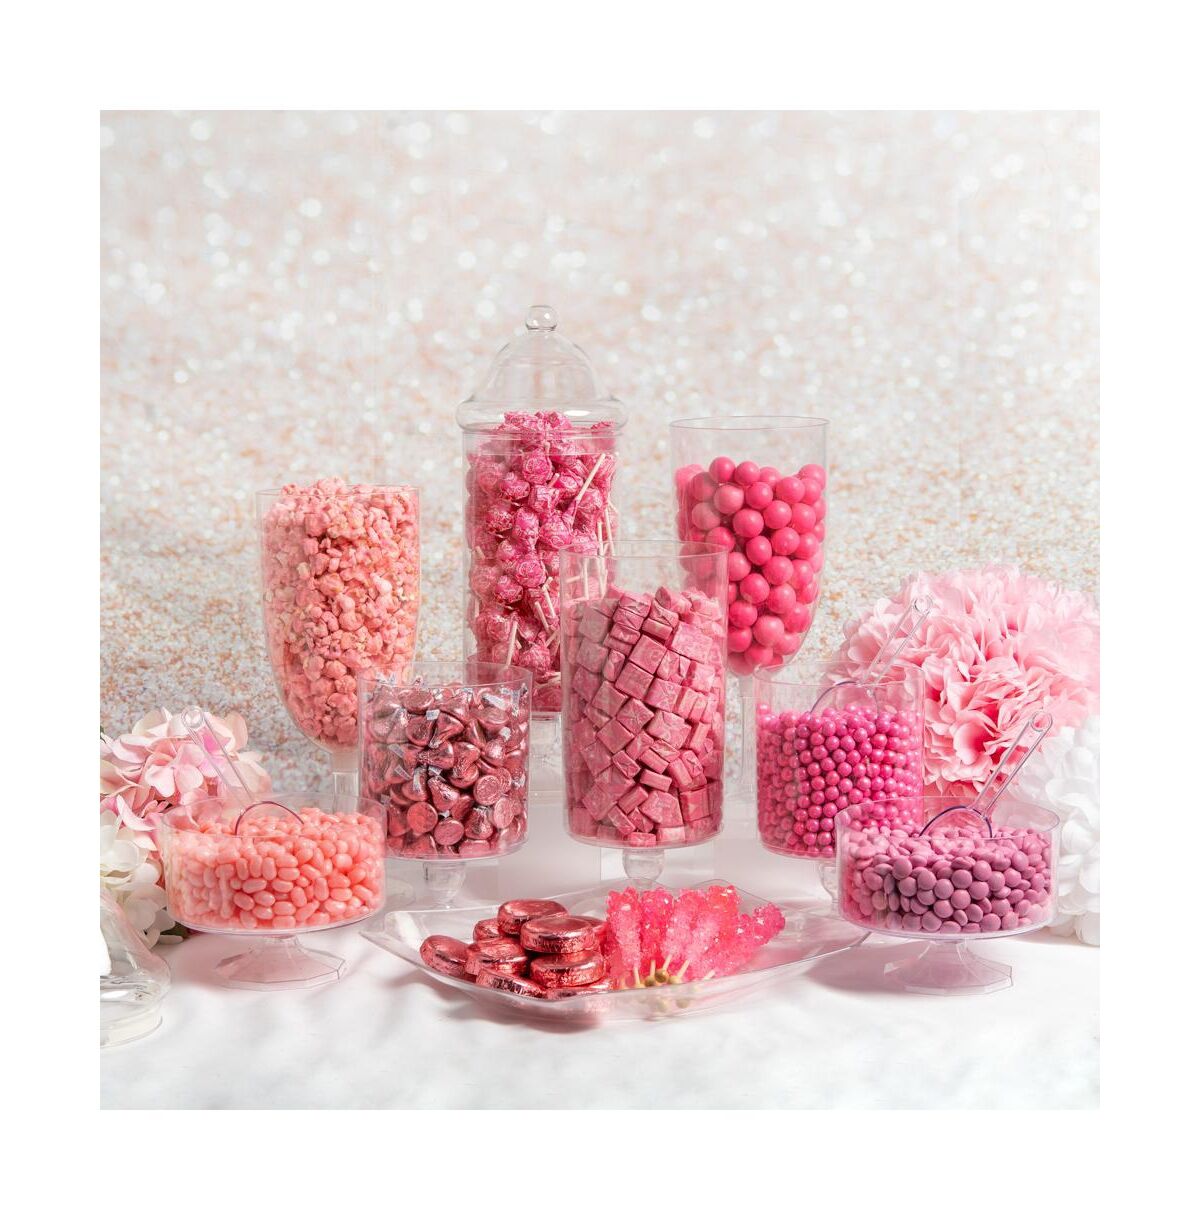 Candy 14 lbs+ Premium Pink Candy Buffet (Feeds 24-36) - Pink